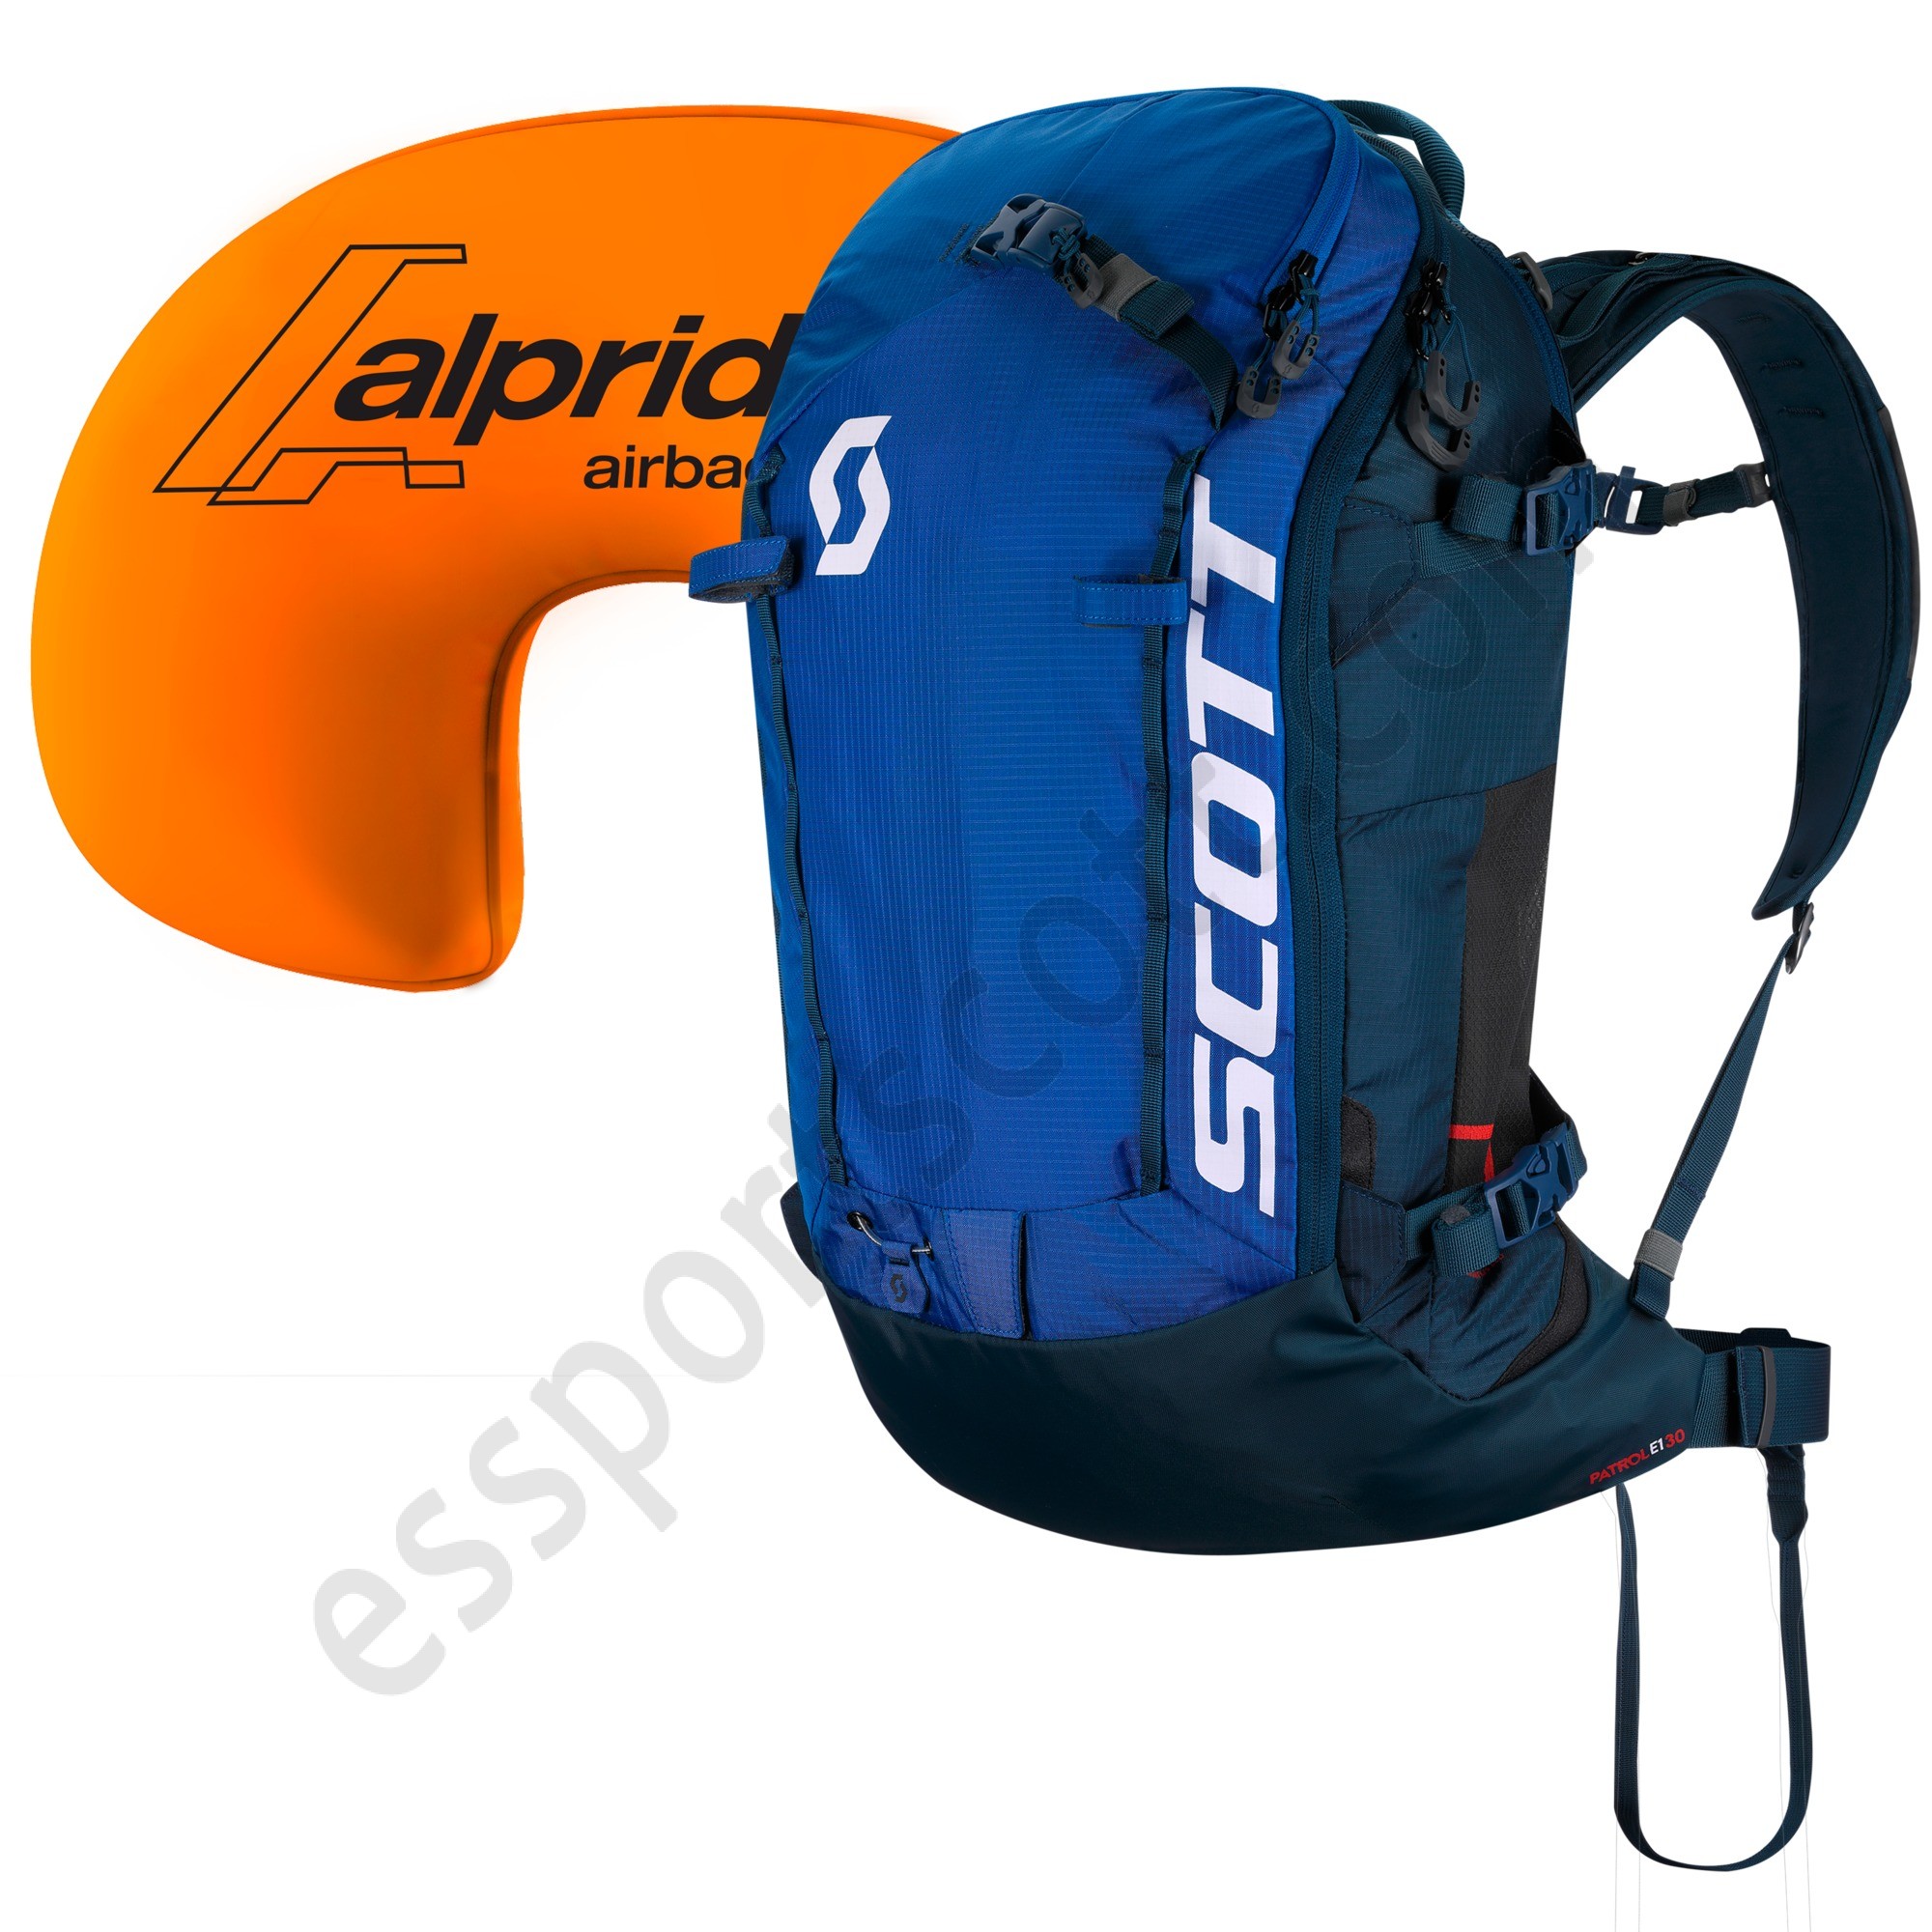 Scott Tienda ◇ Patrol E1 30 Backpack Kit - Scott Tienda ◇ Patrol E1 30 Backpack Kit